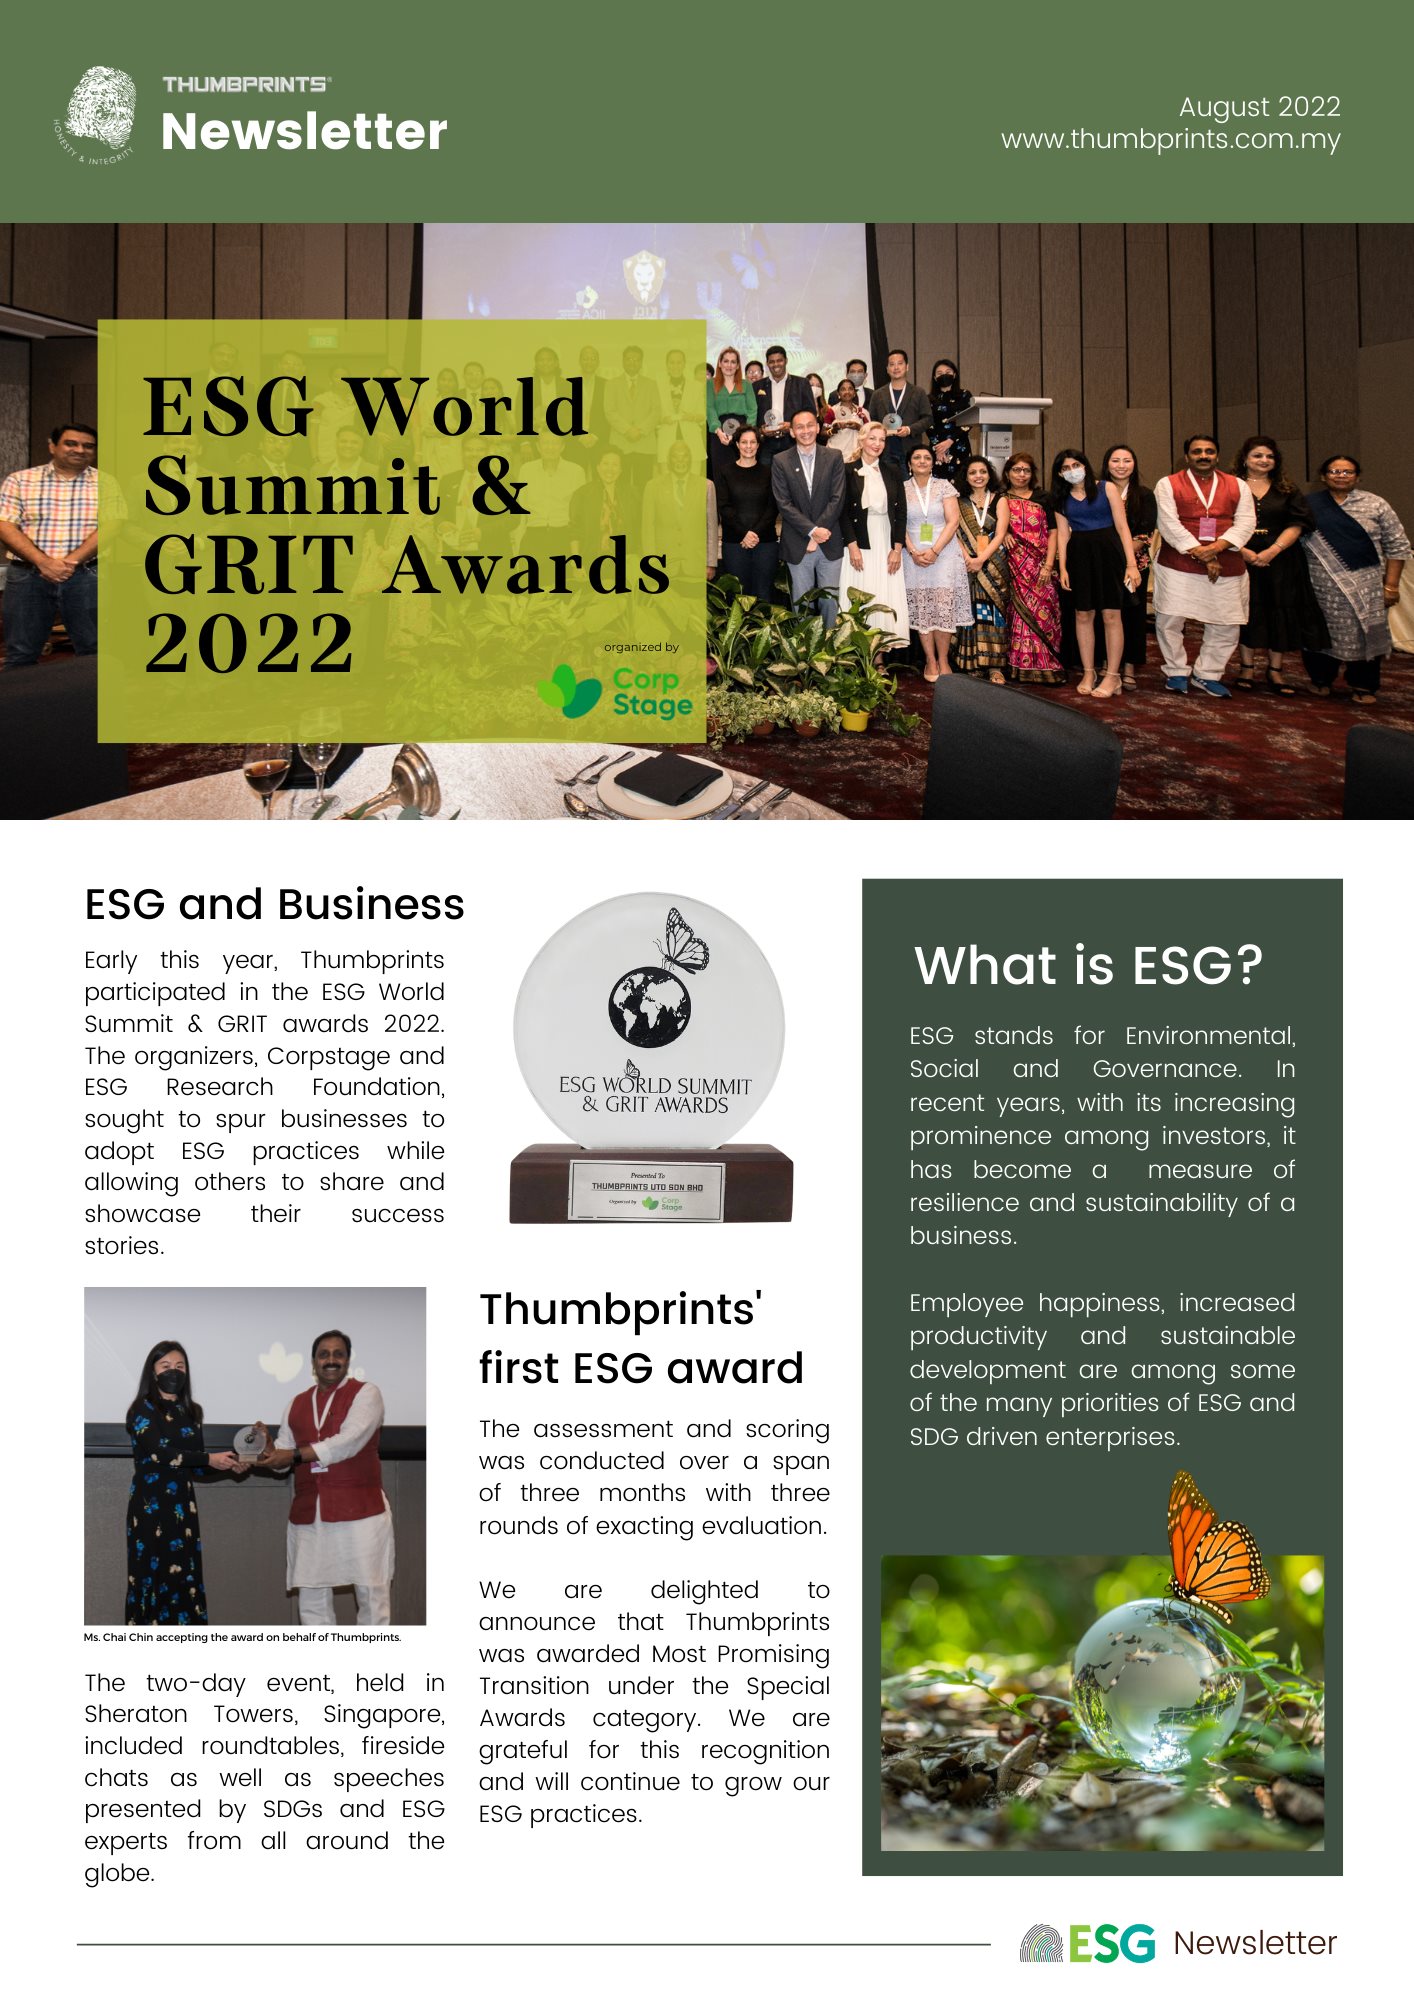 ESG World Summit & GRIT Award 2022